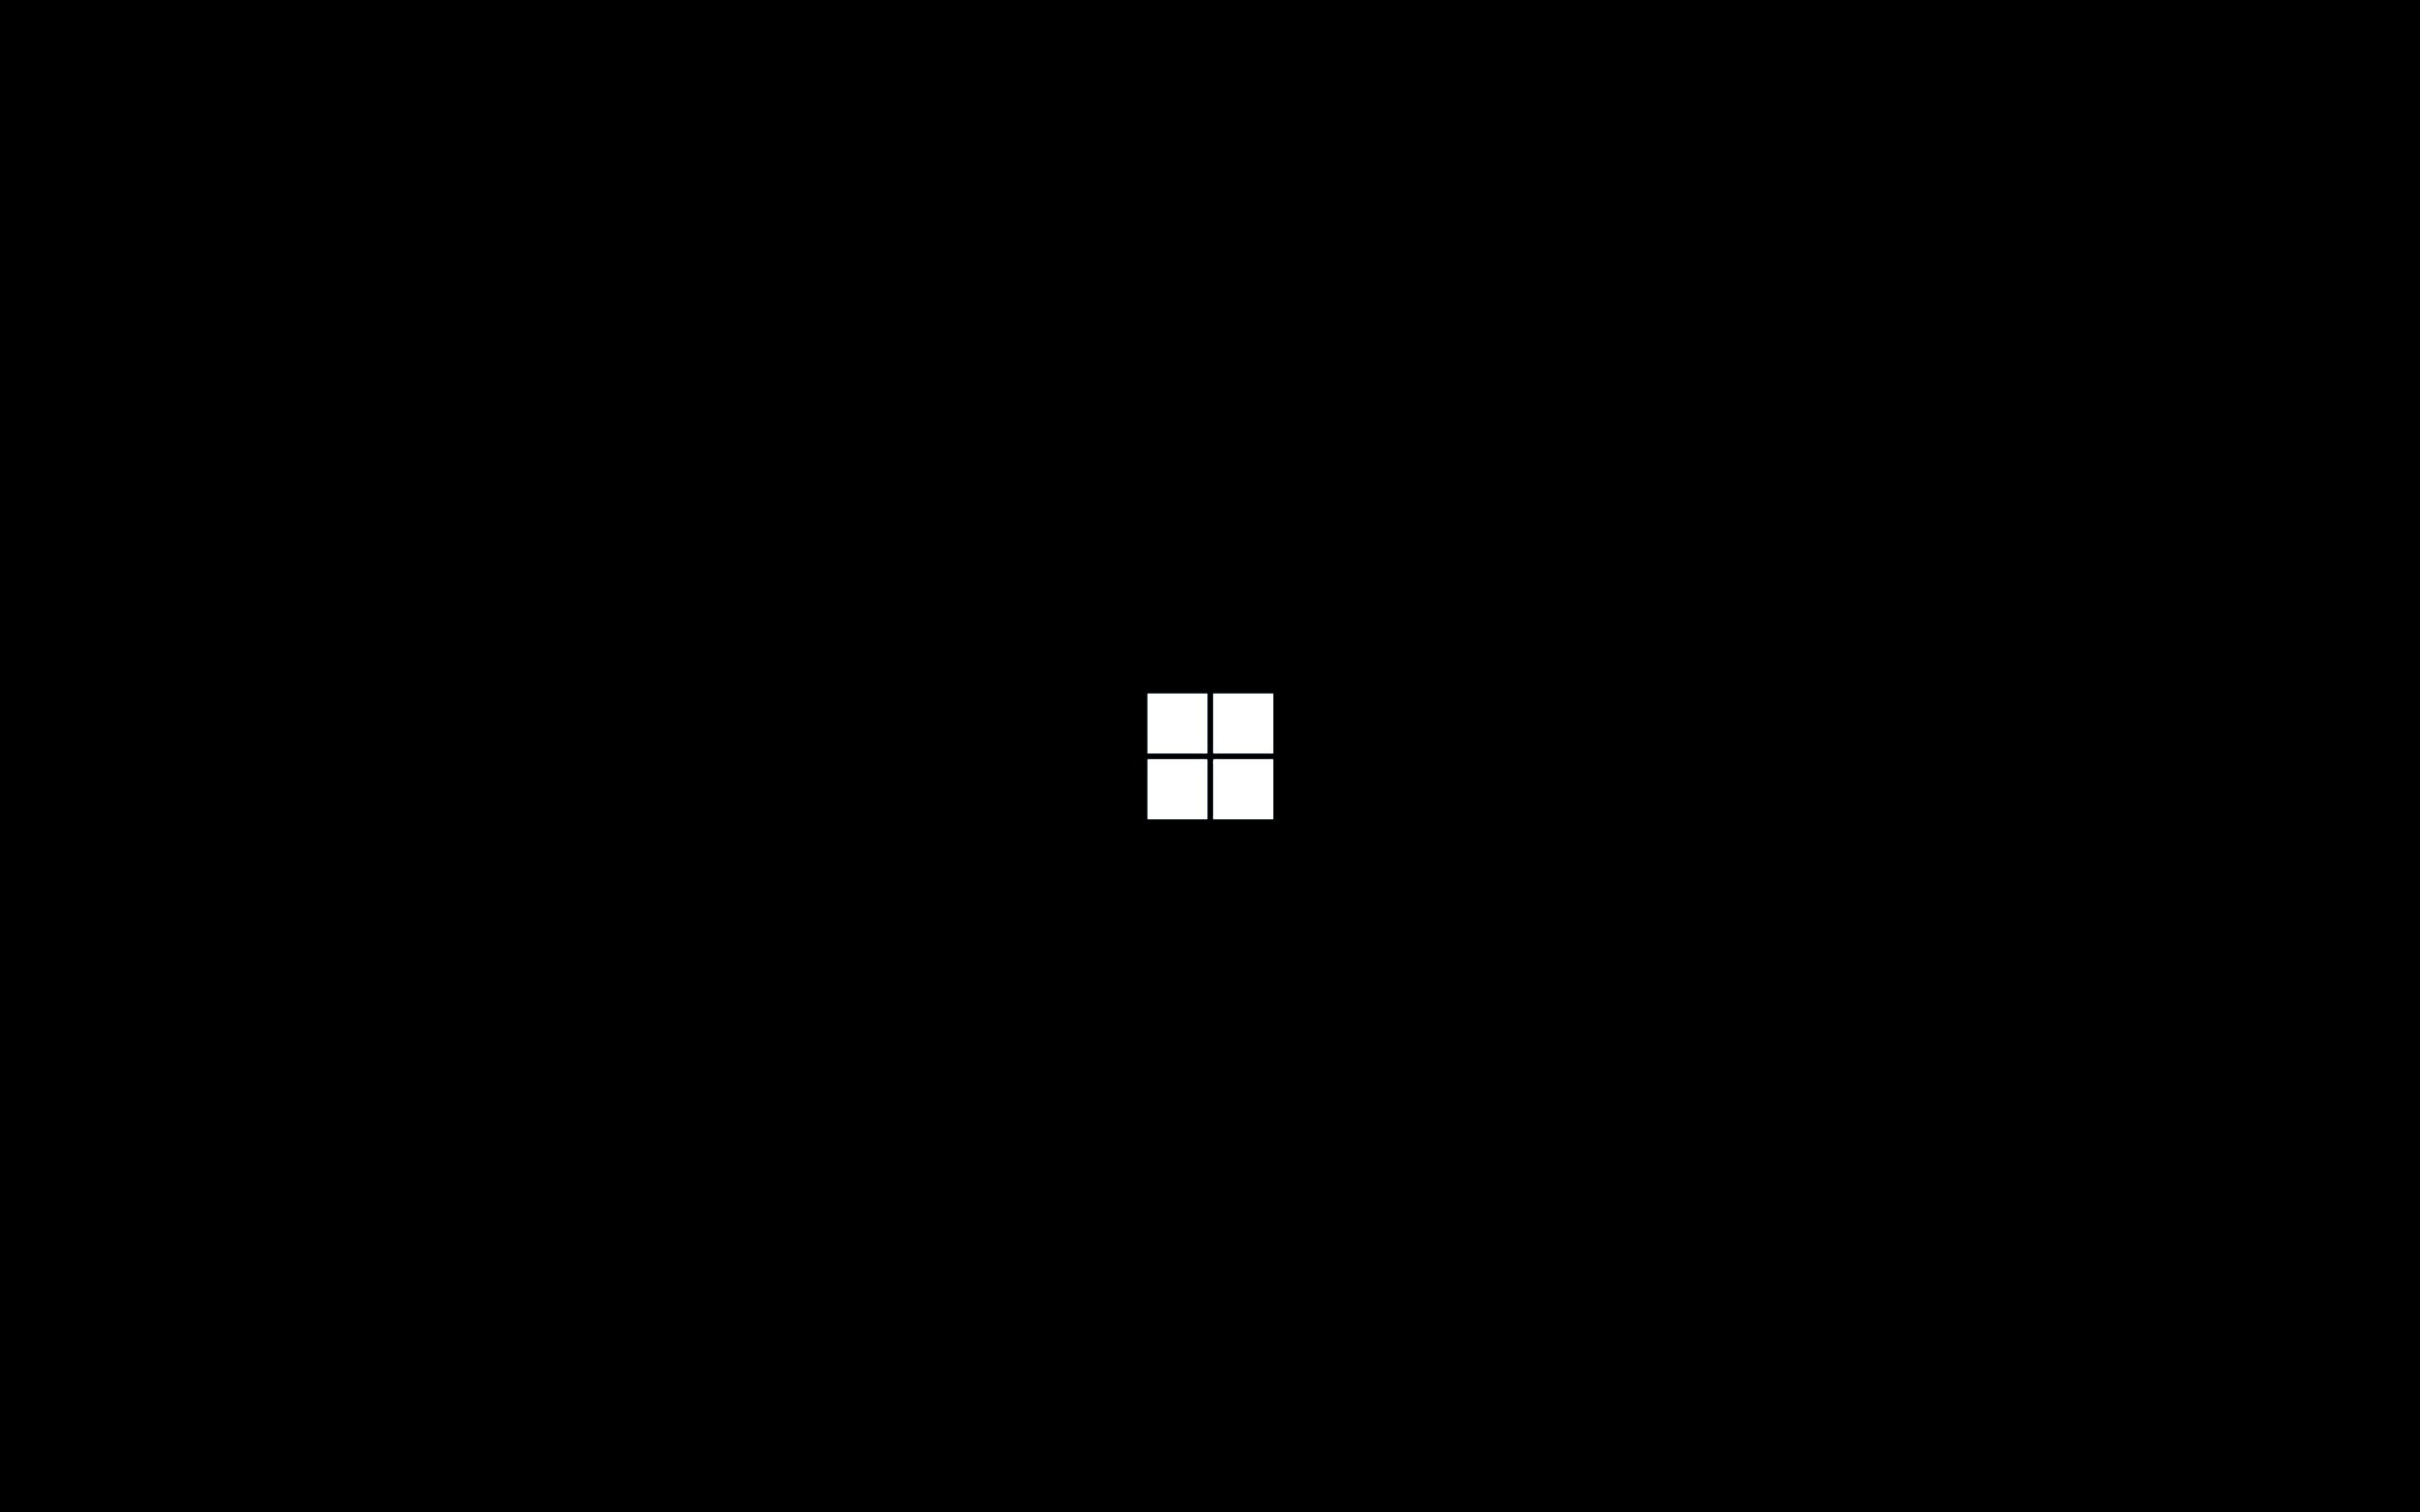 General 2560x1600 Windows 10 Microsoft Windows operating system minimalism logo simple background